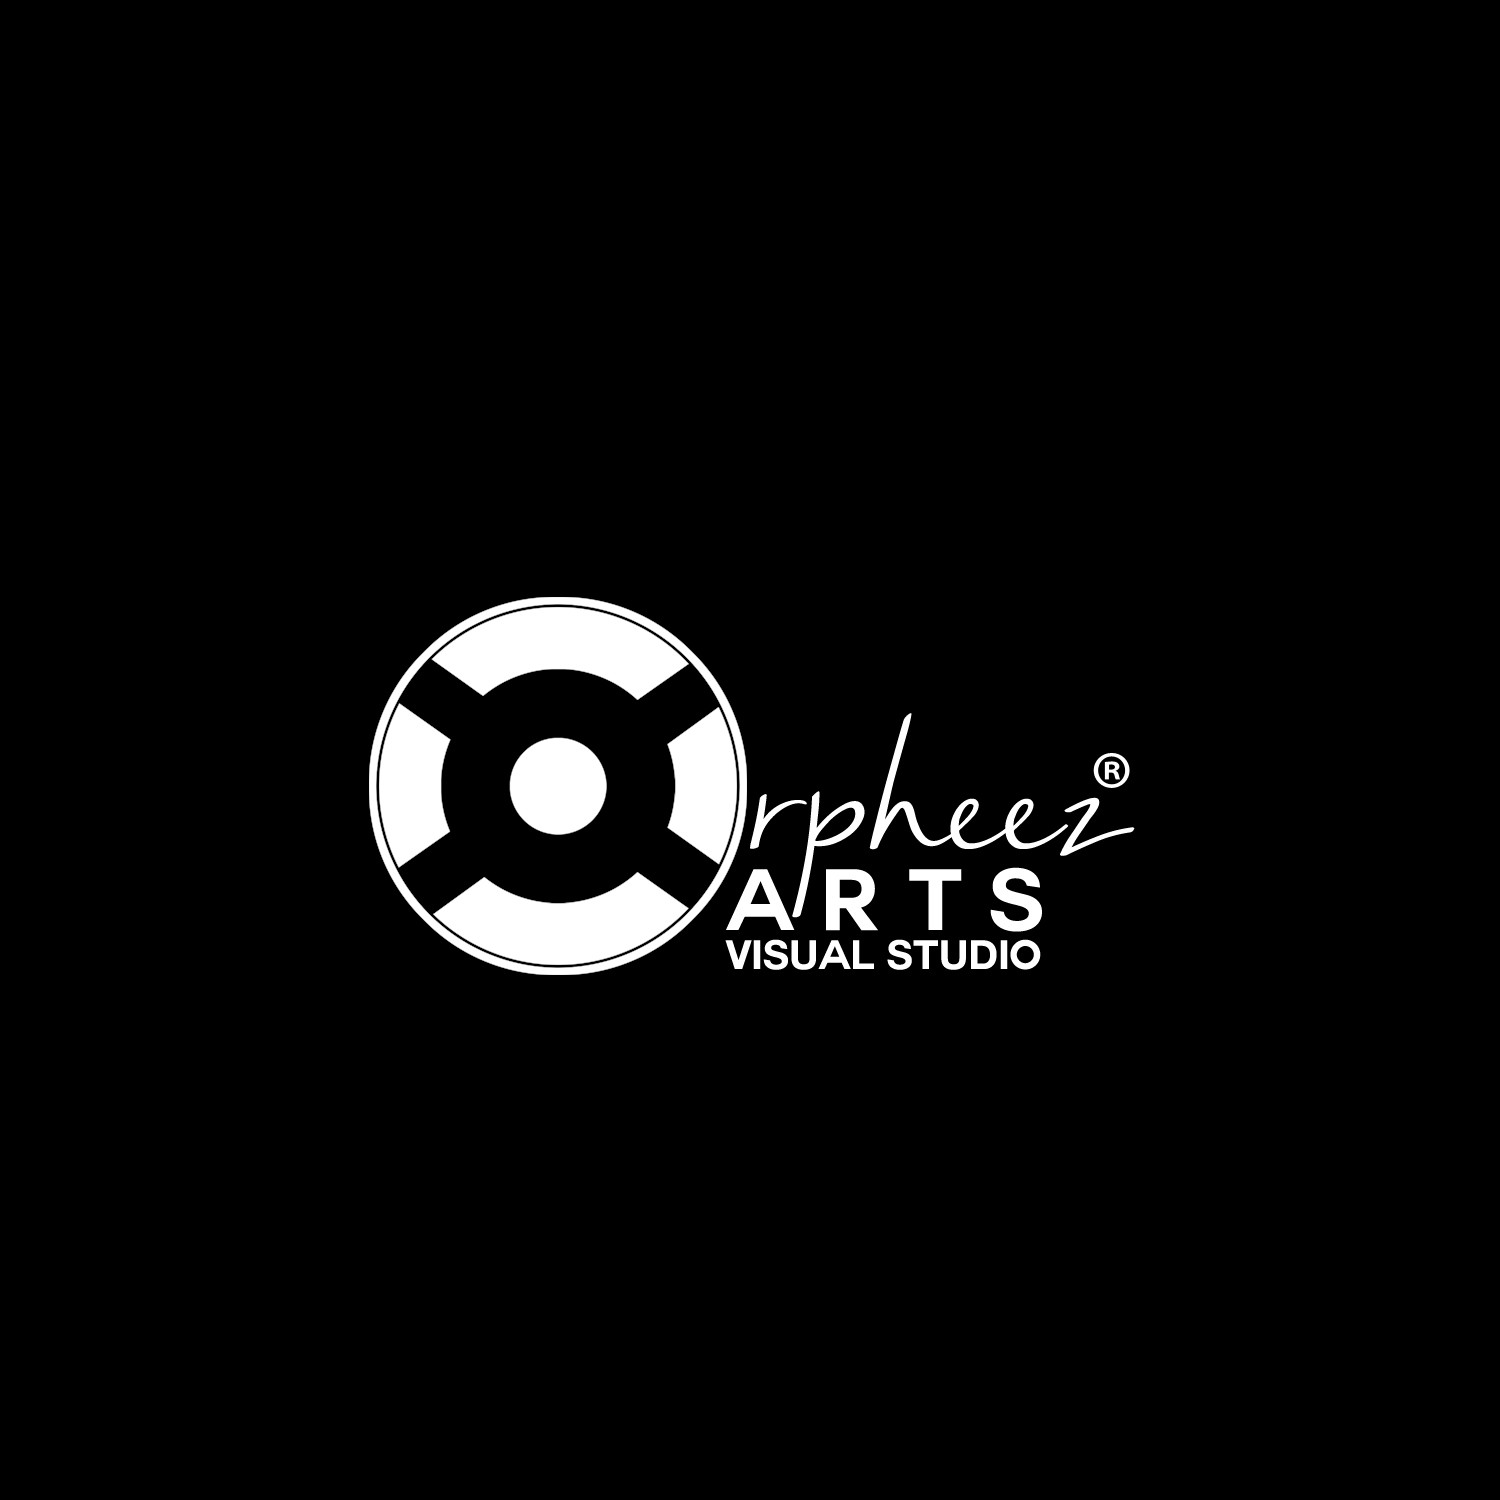 Orpheez Arts visual studio